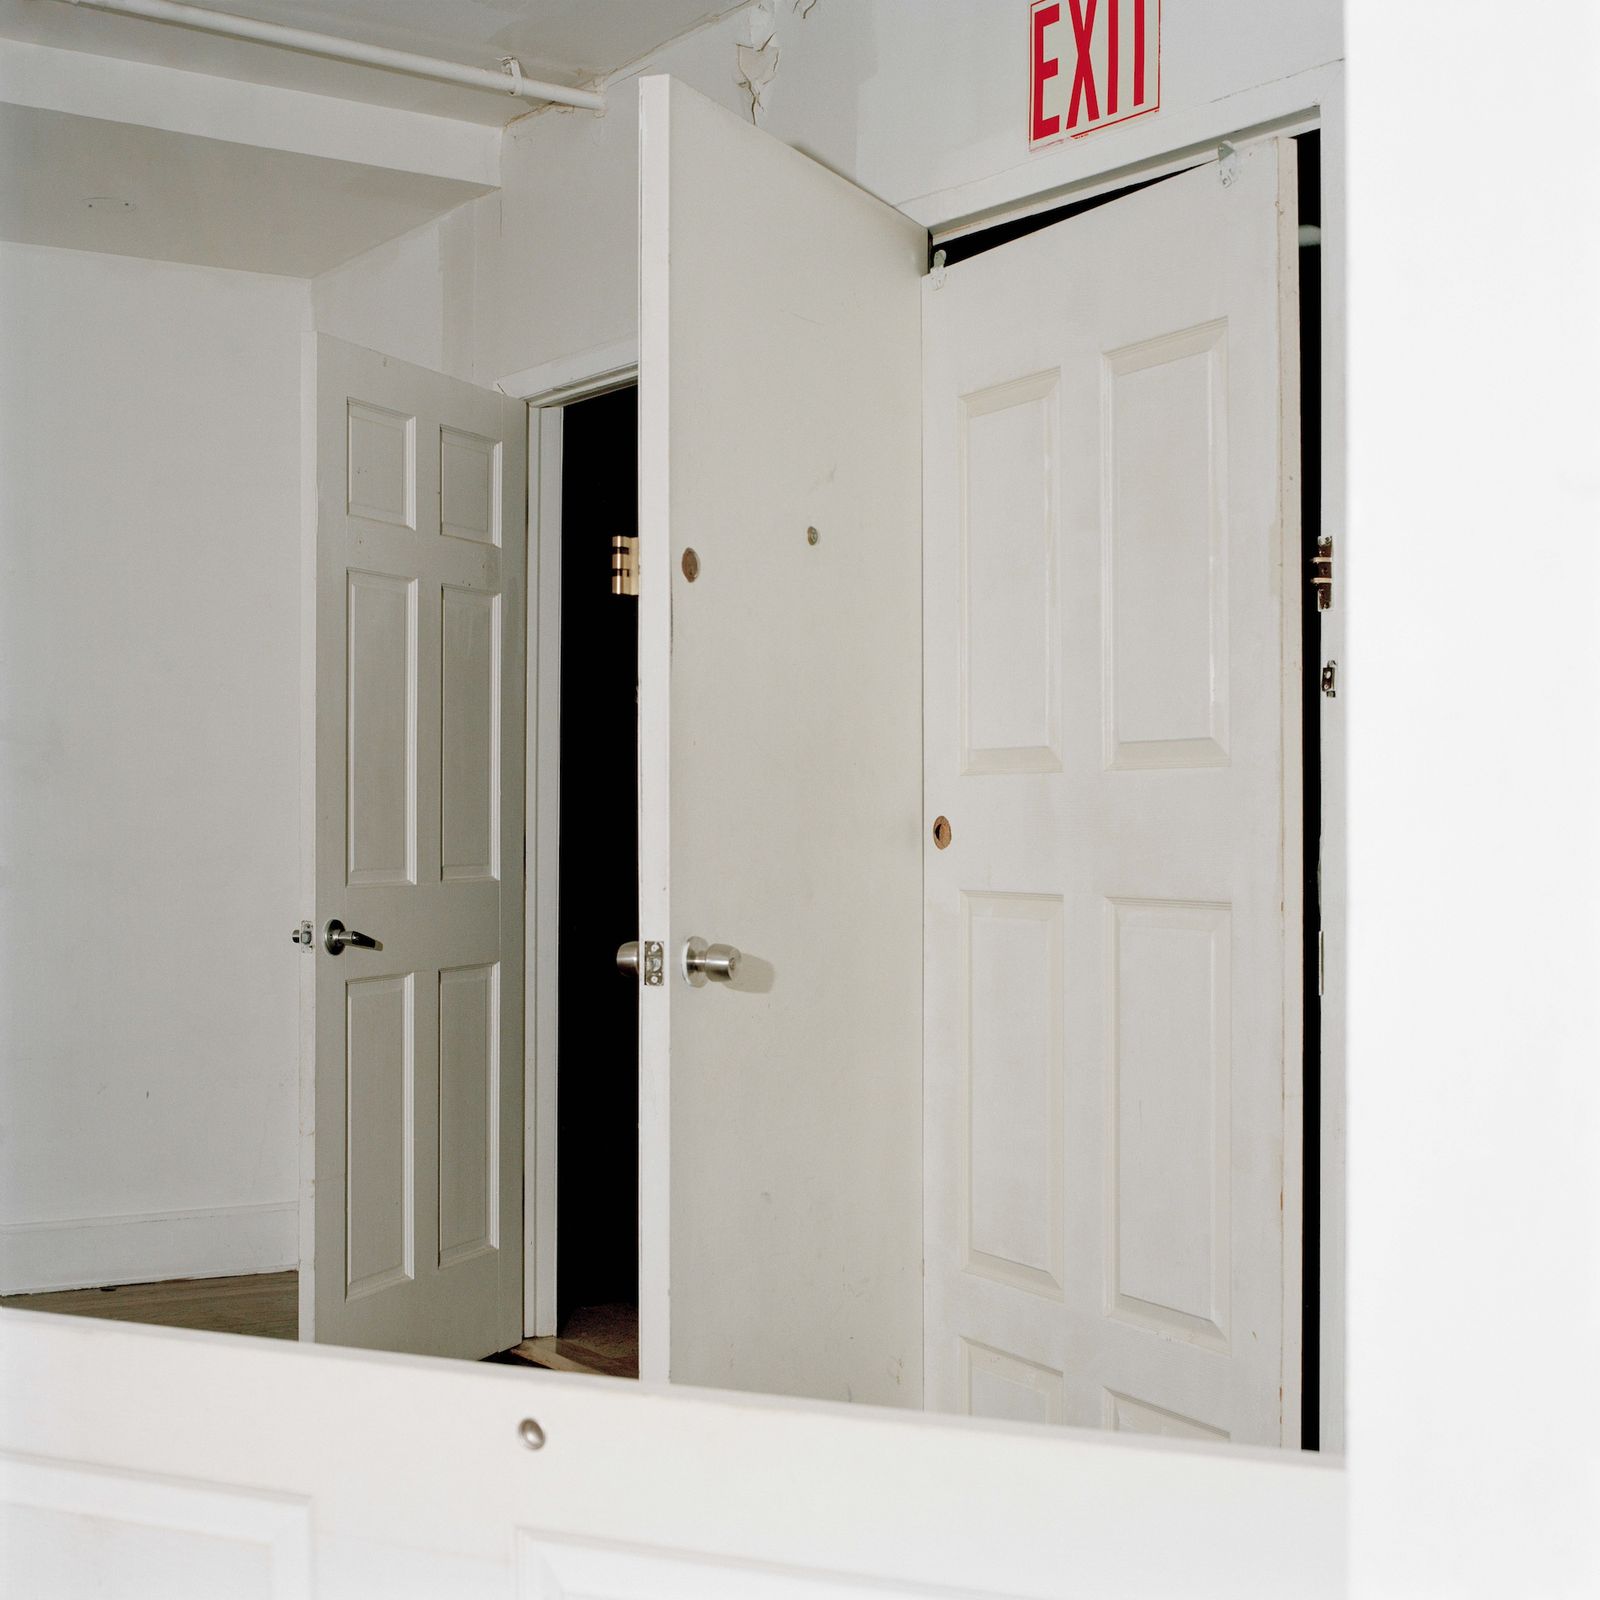 © Su Ji Lee - Dice Doors, 2023, 30x30 inches, Archival pigment print